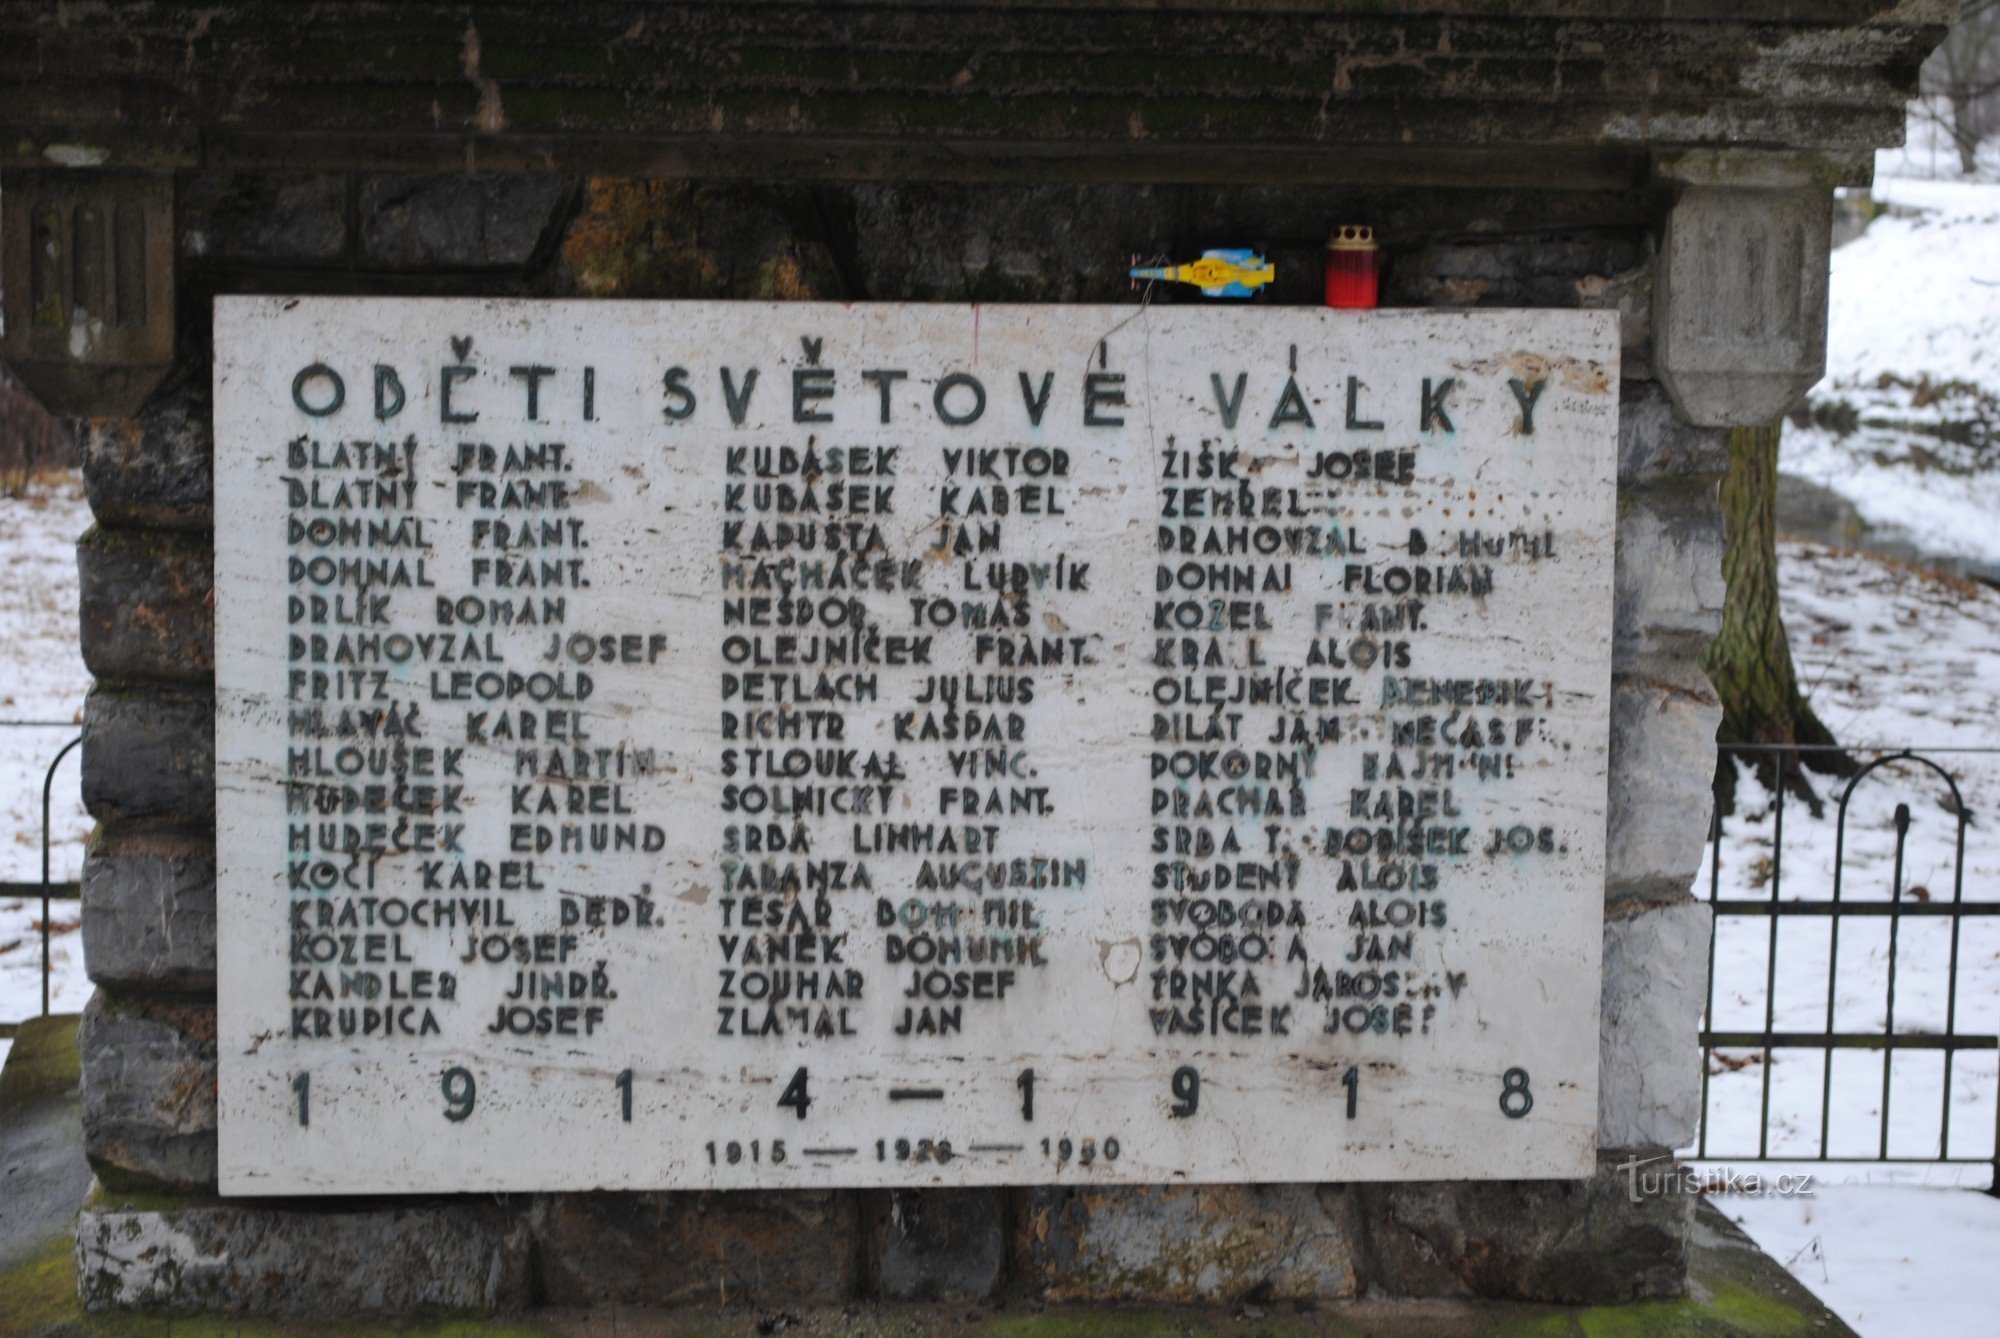 Bílovice nad Svitavou – I. világháborús emlékmű